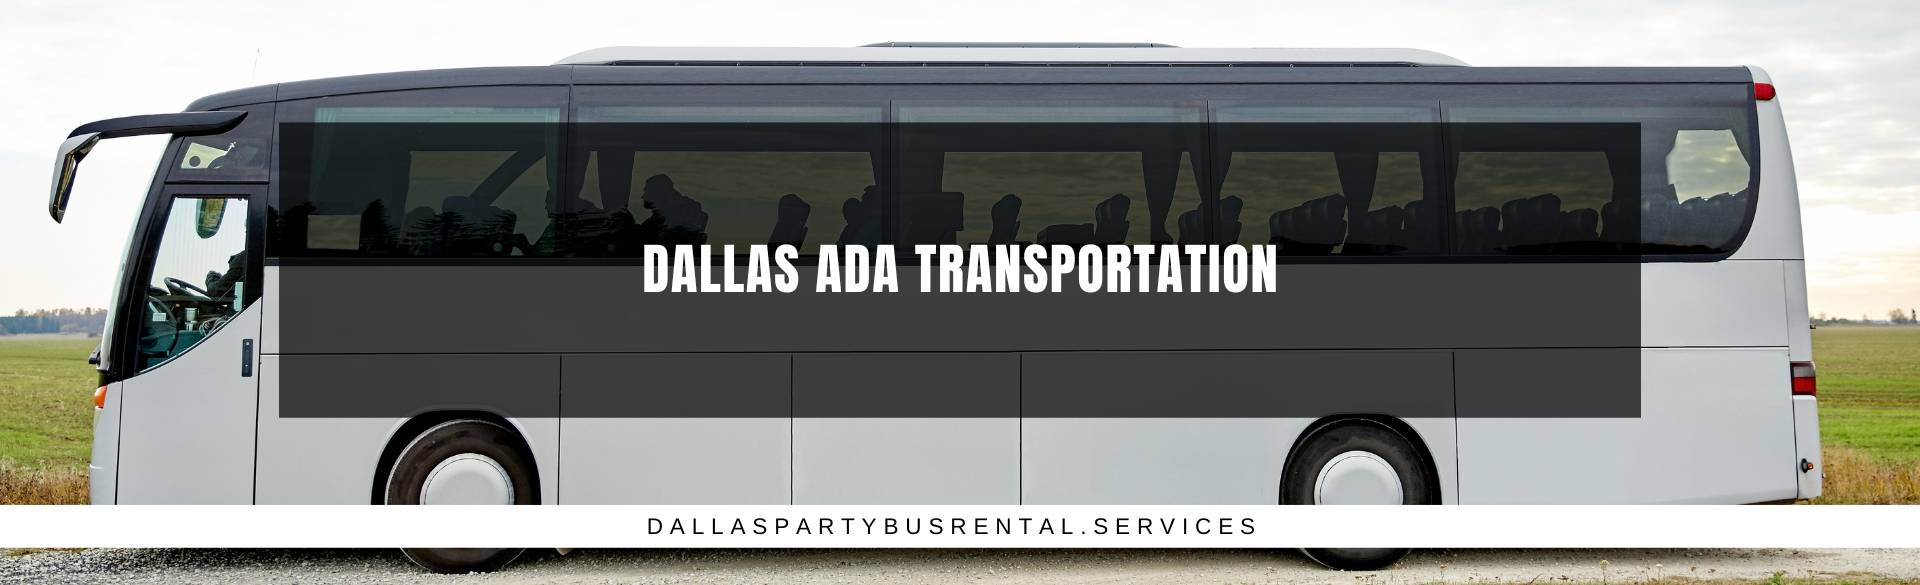 Dallas ADA Transportation